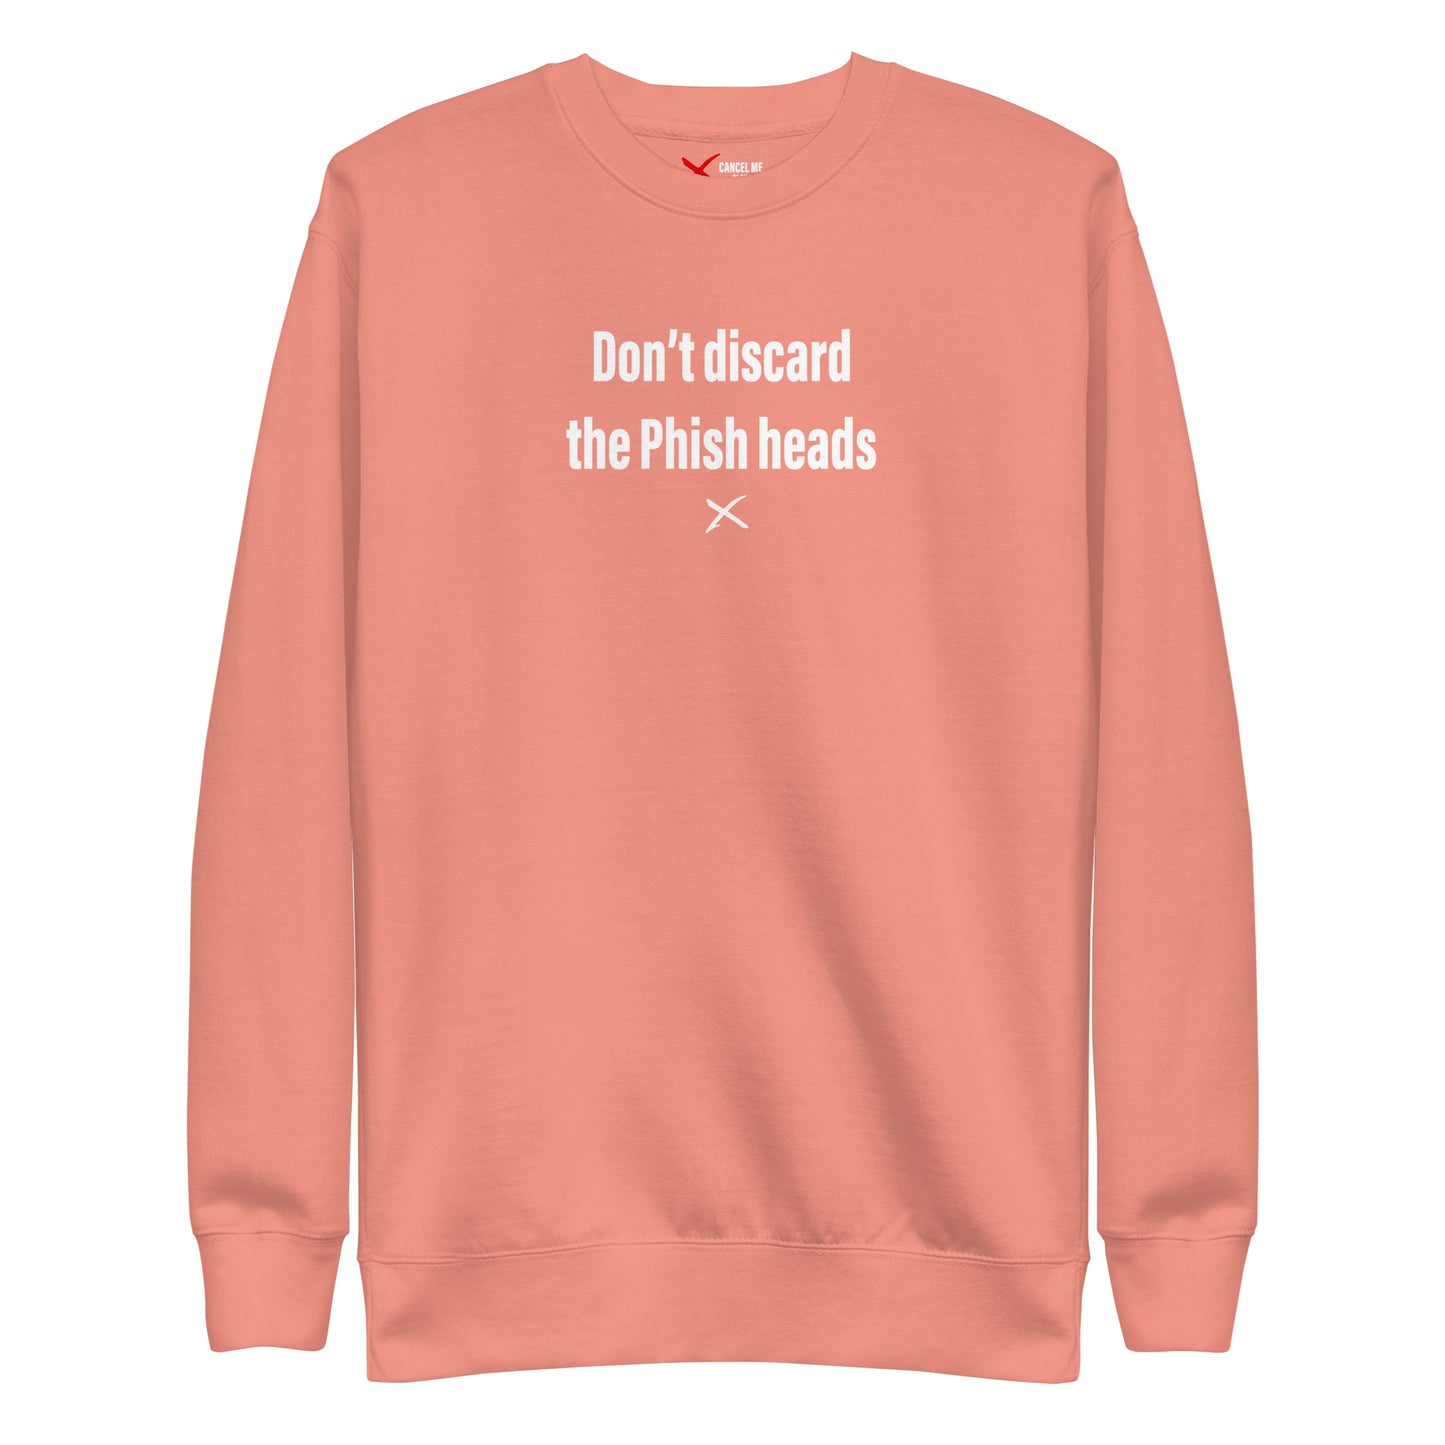 Don't discard the Phish heads - Sweatshirt